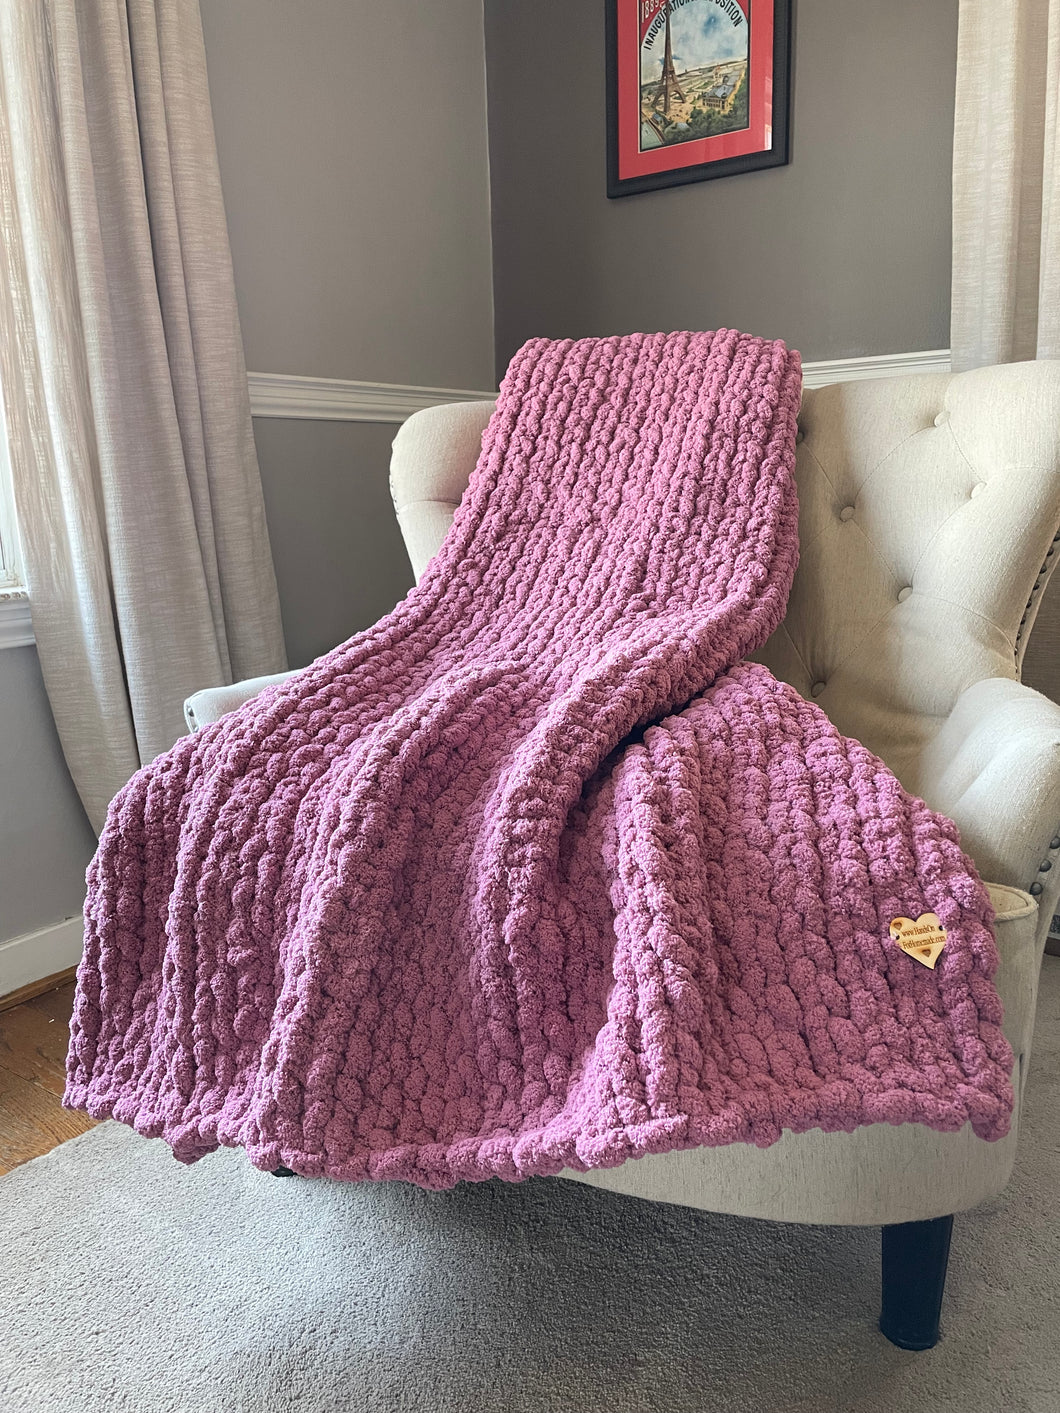 Cassis Blanket | Chunky Knit Blanket - Hands On For Homemade